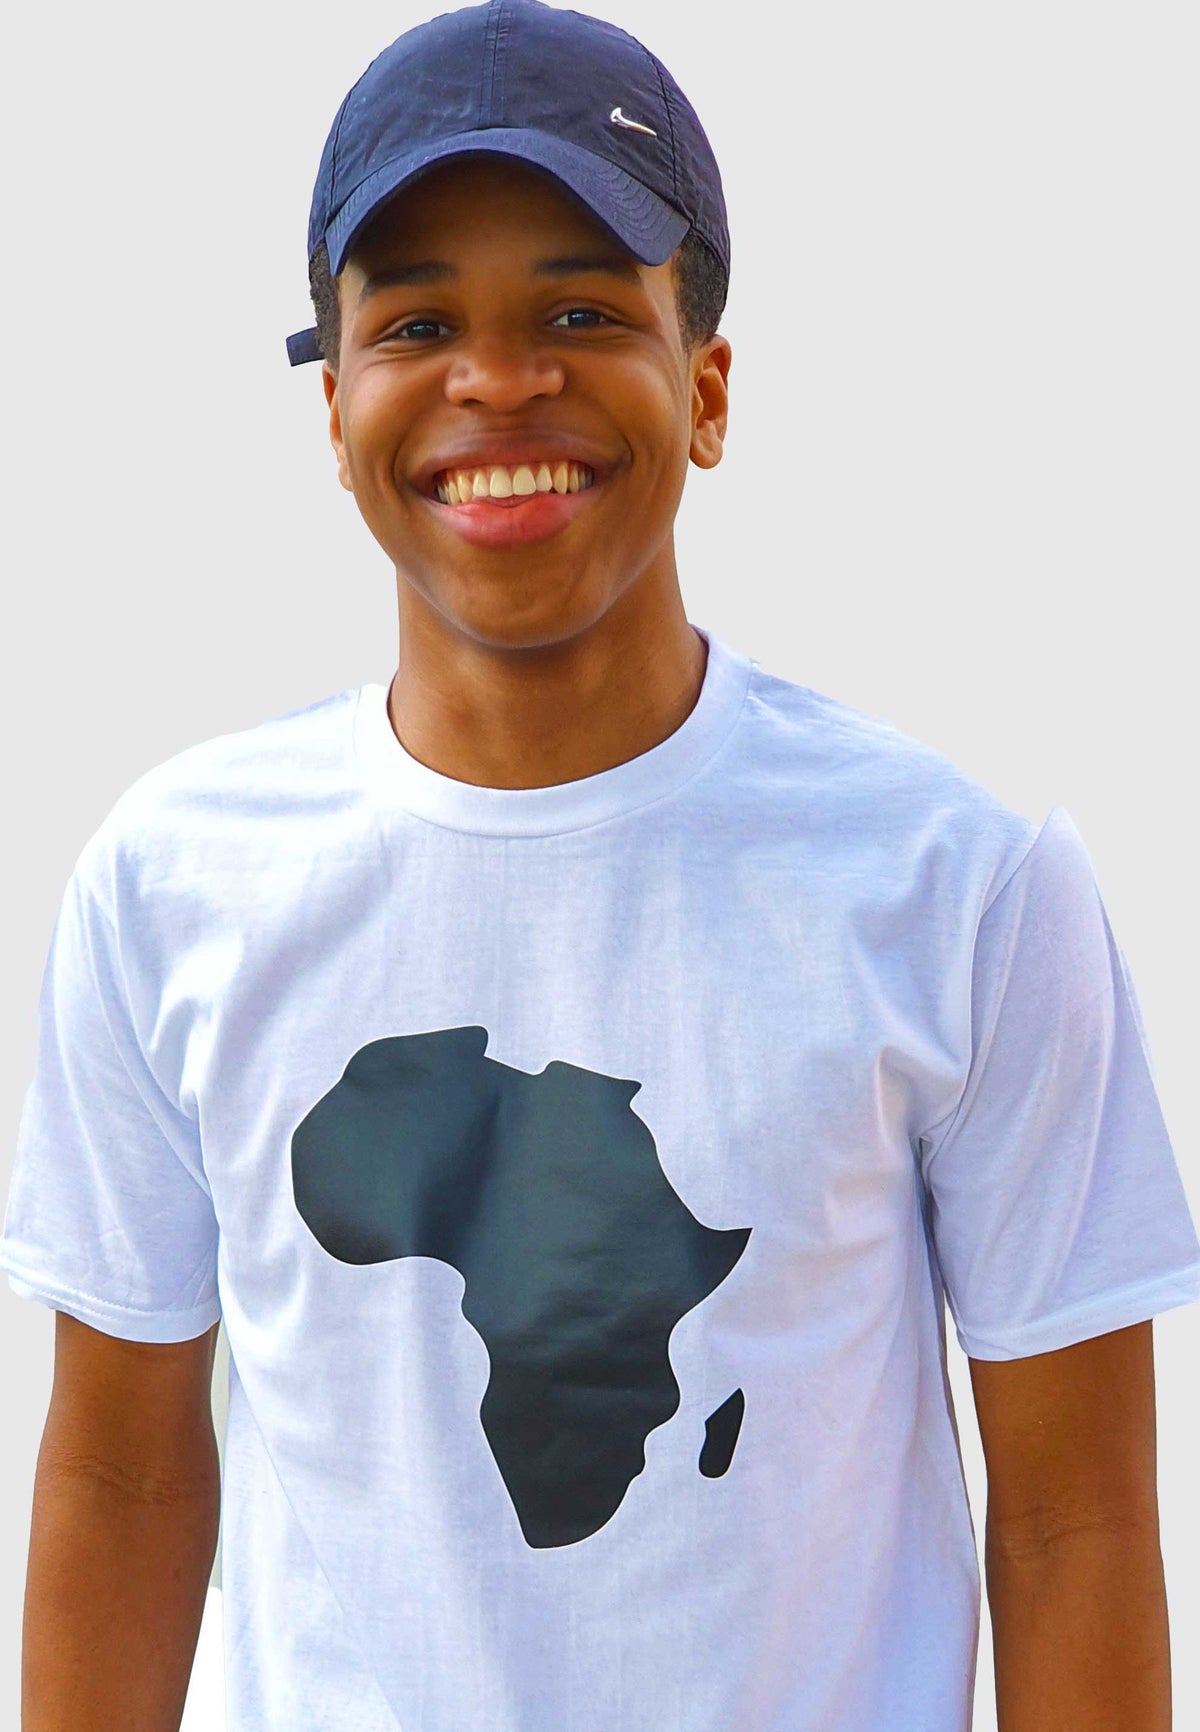 Men's T-Shirt - White T-Shirt with Black Vinyl Africa Map